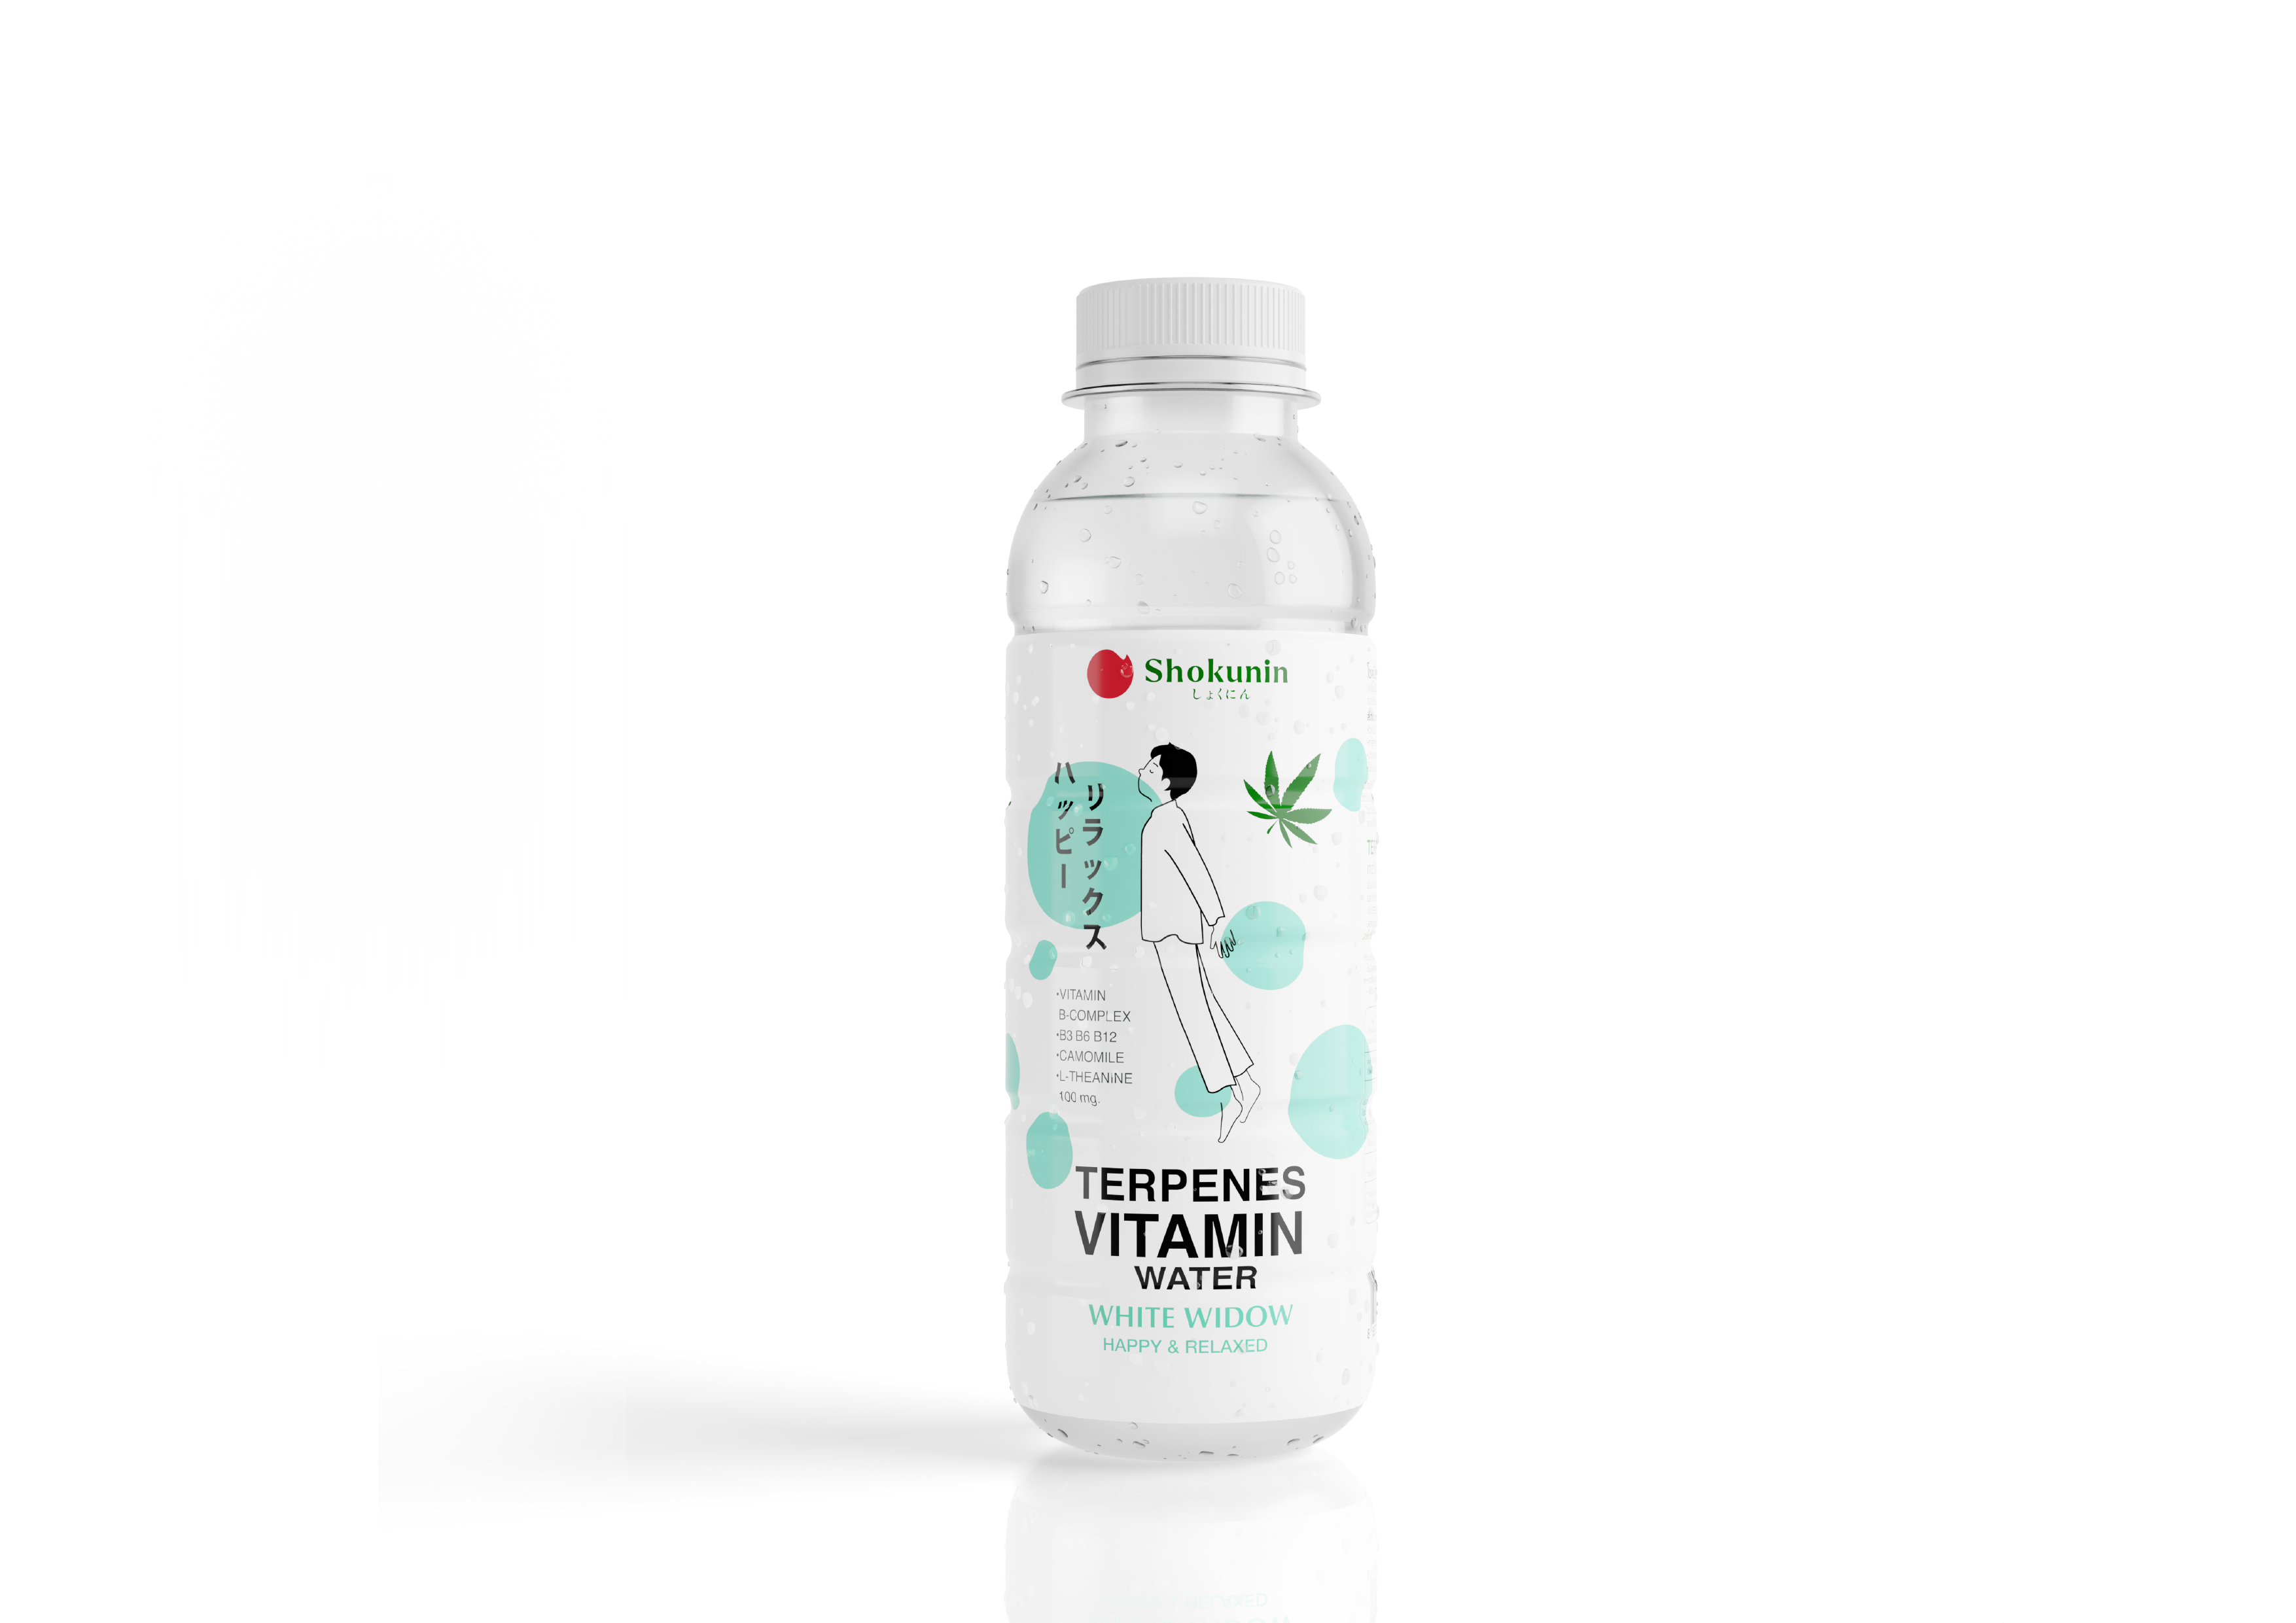 国际包装设计分享学习| Shokunin Terpenes Vitamin Water维生素水包装设计